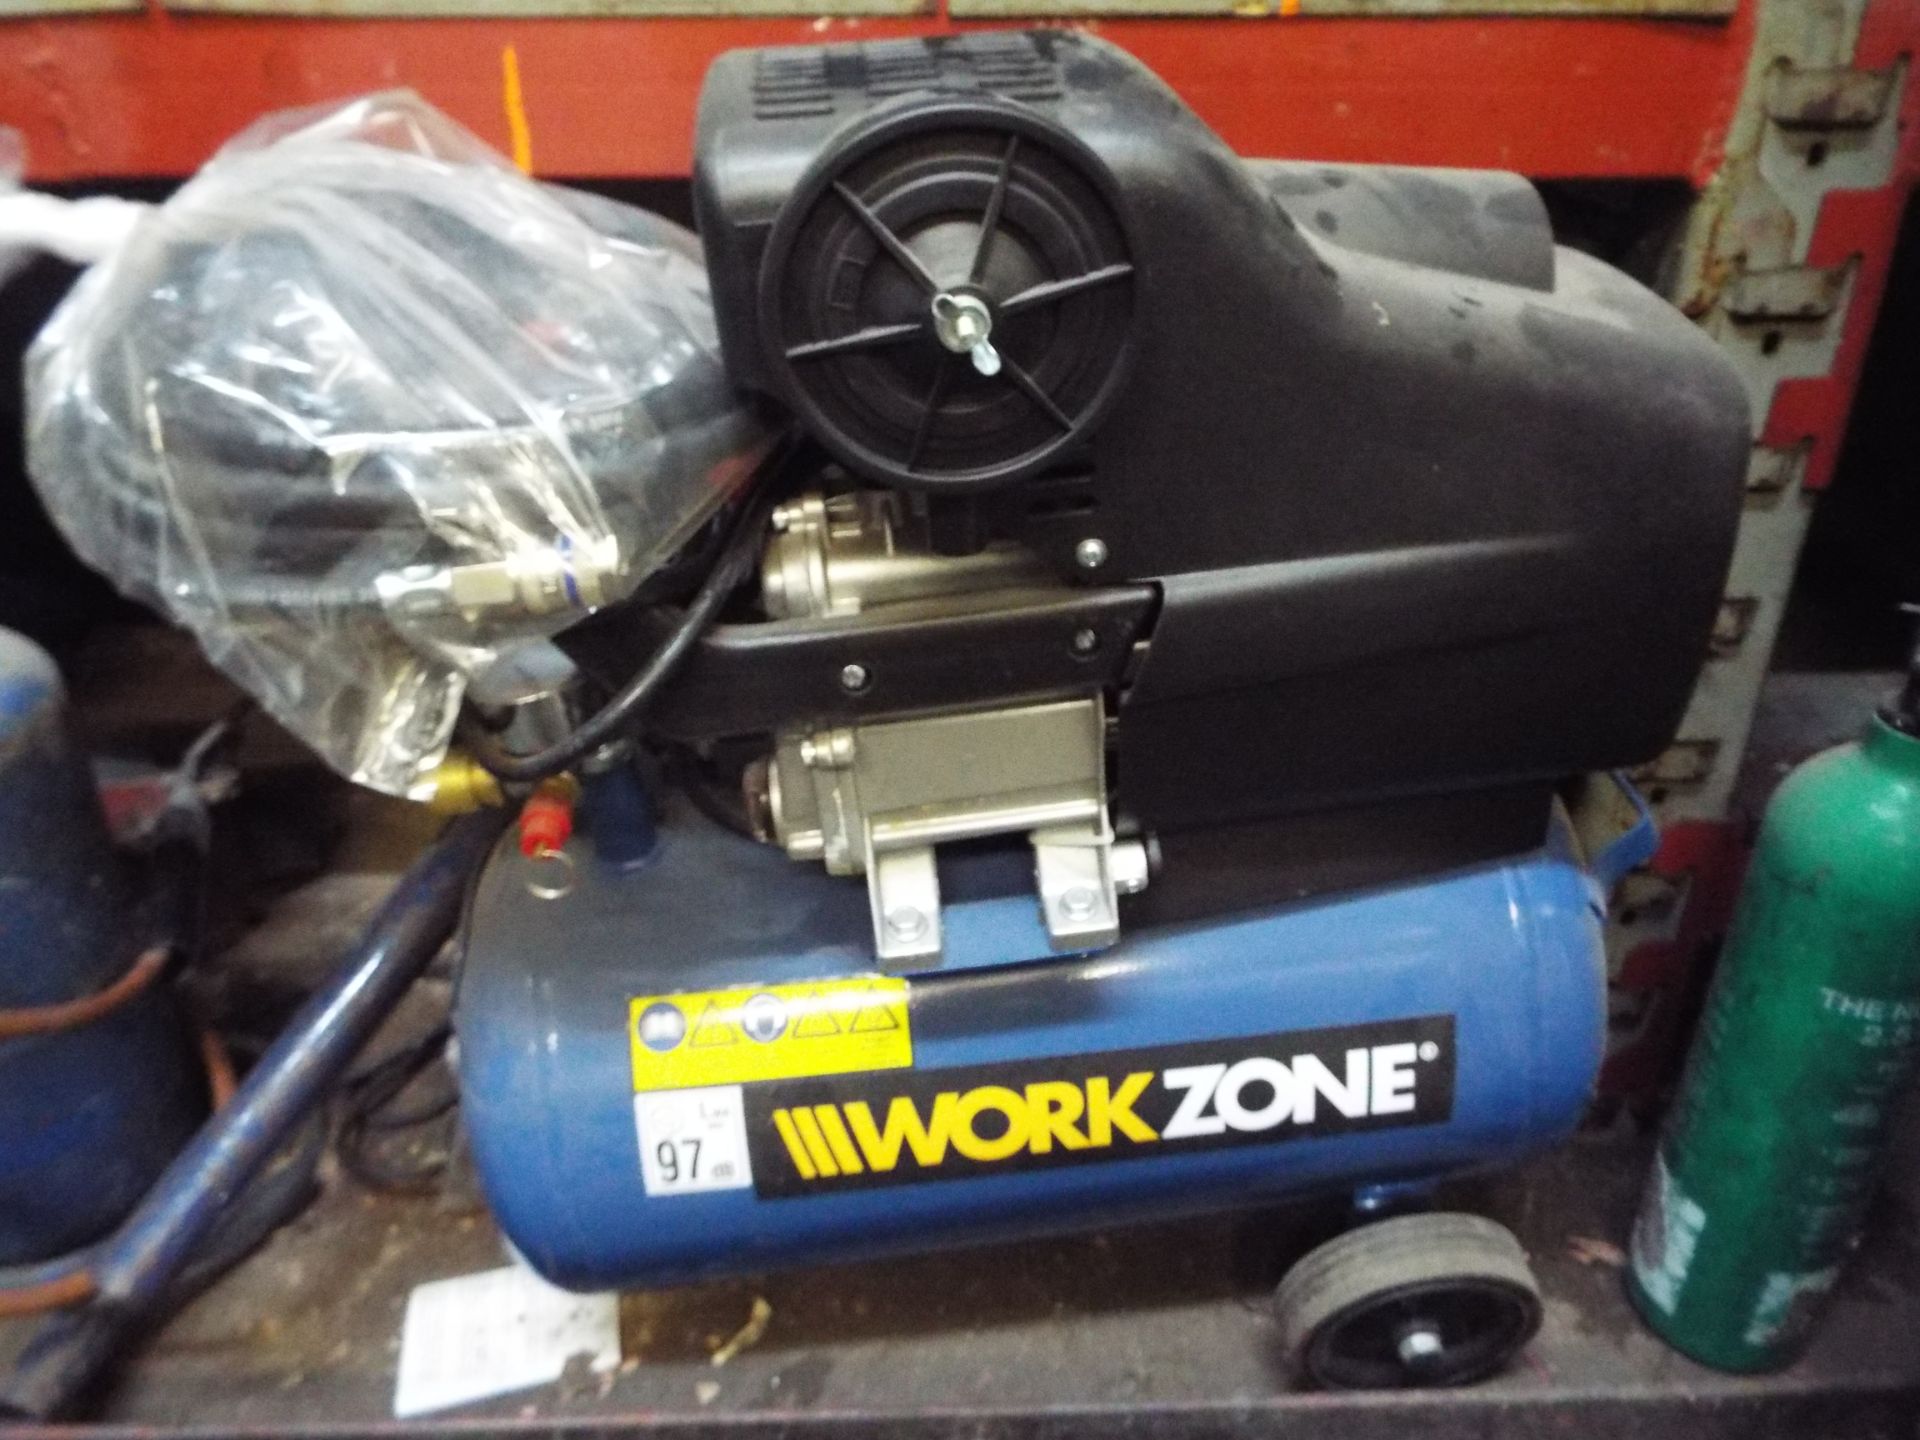 Workzone Compressor (New)